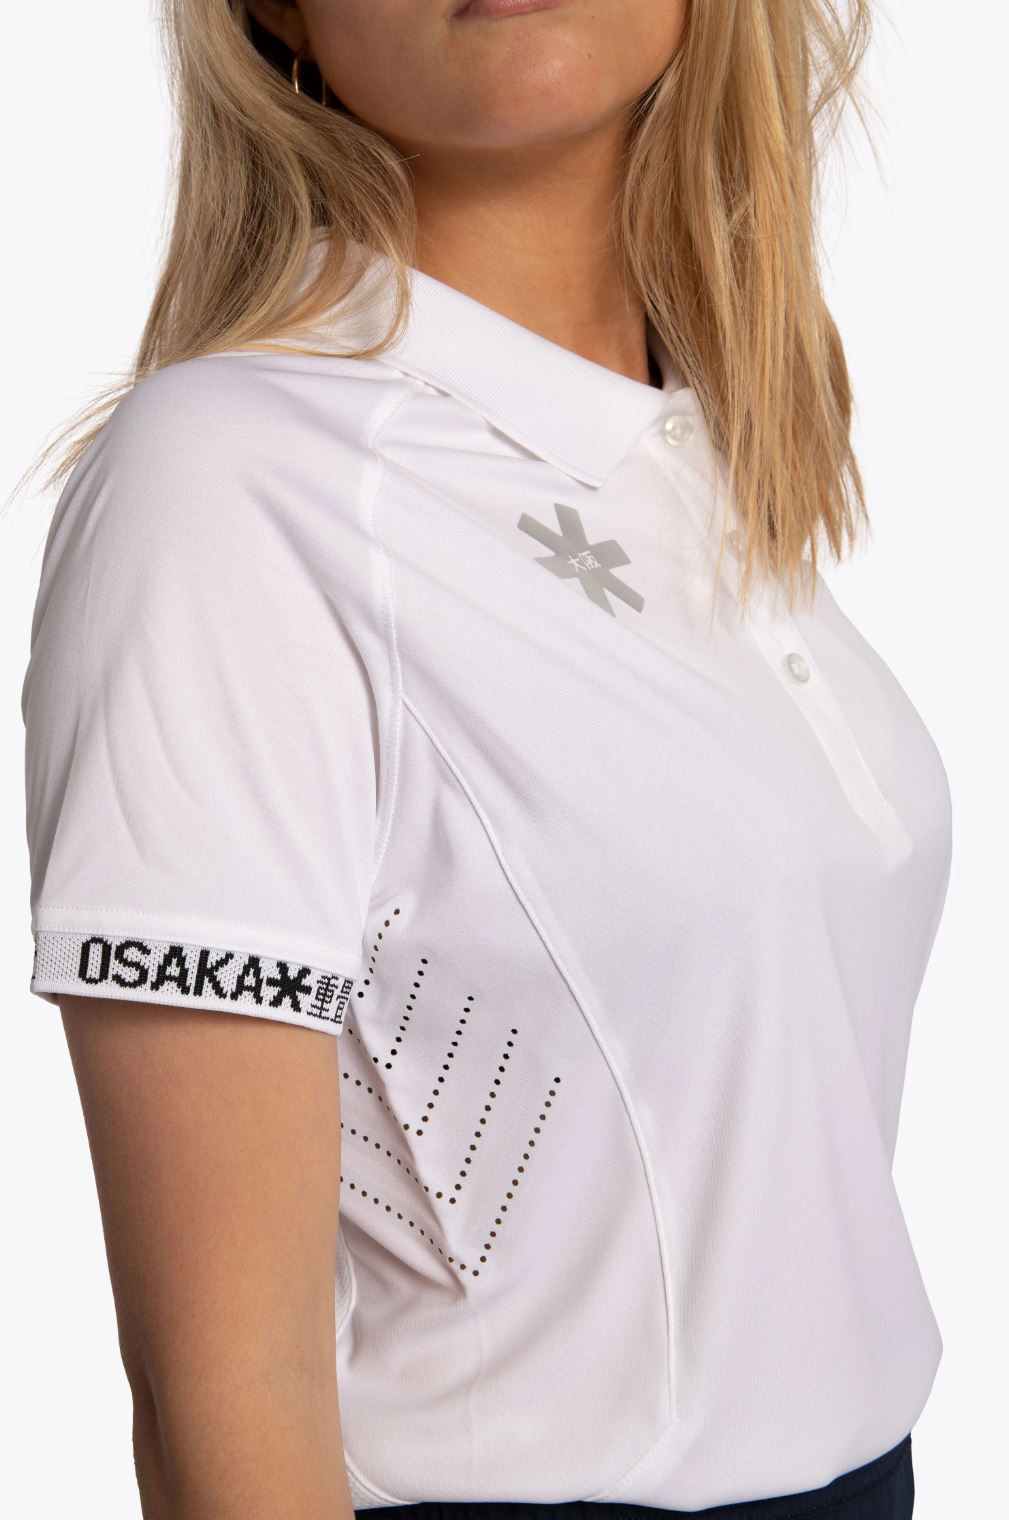 Se Osaka Women's Polo Jersey (Hvid) - M hos Padellife